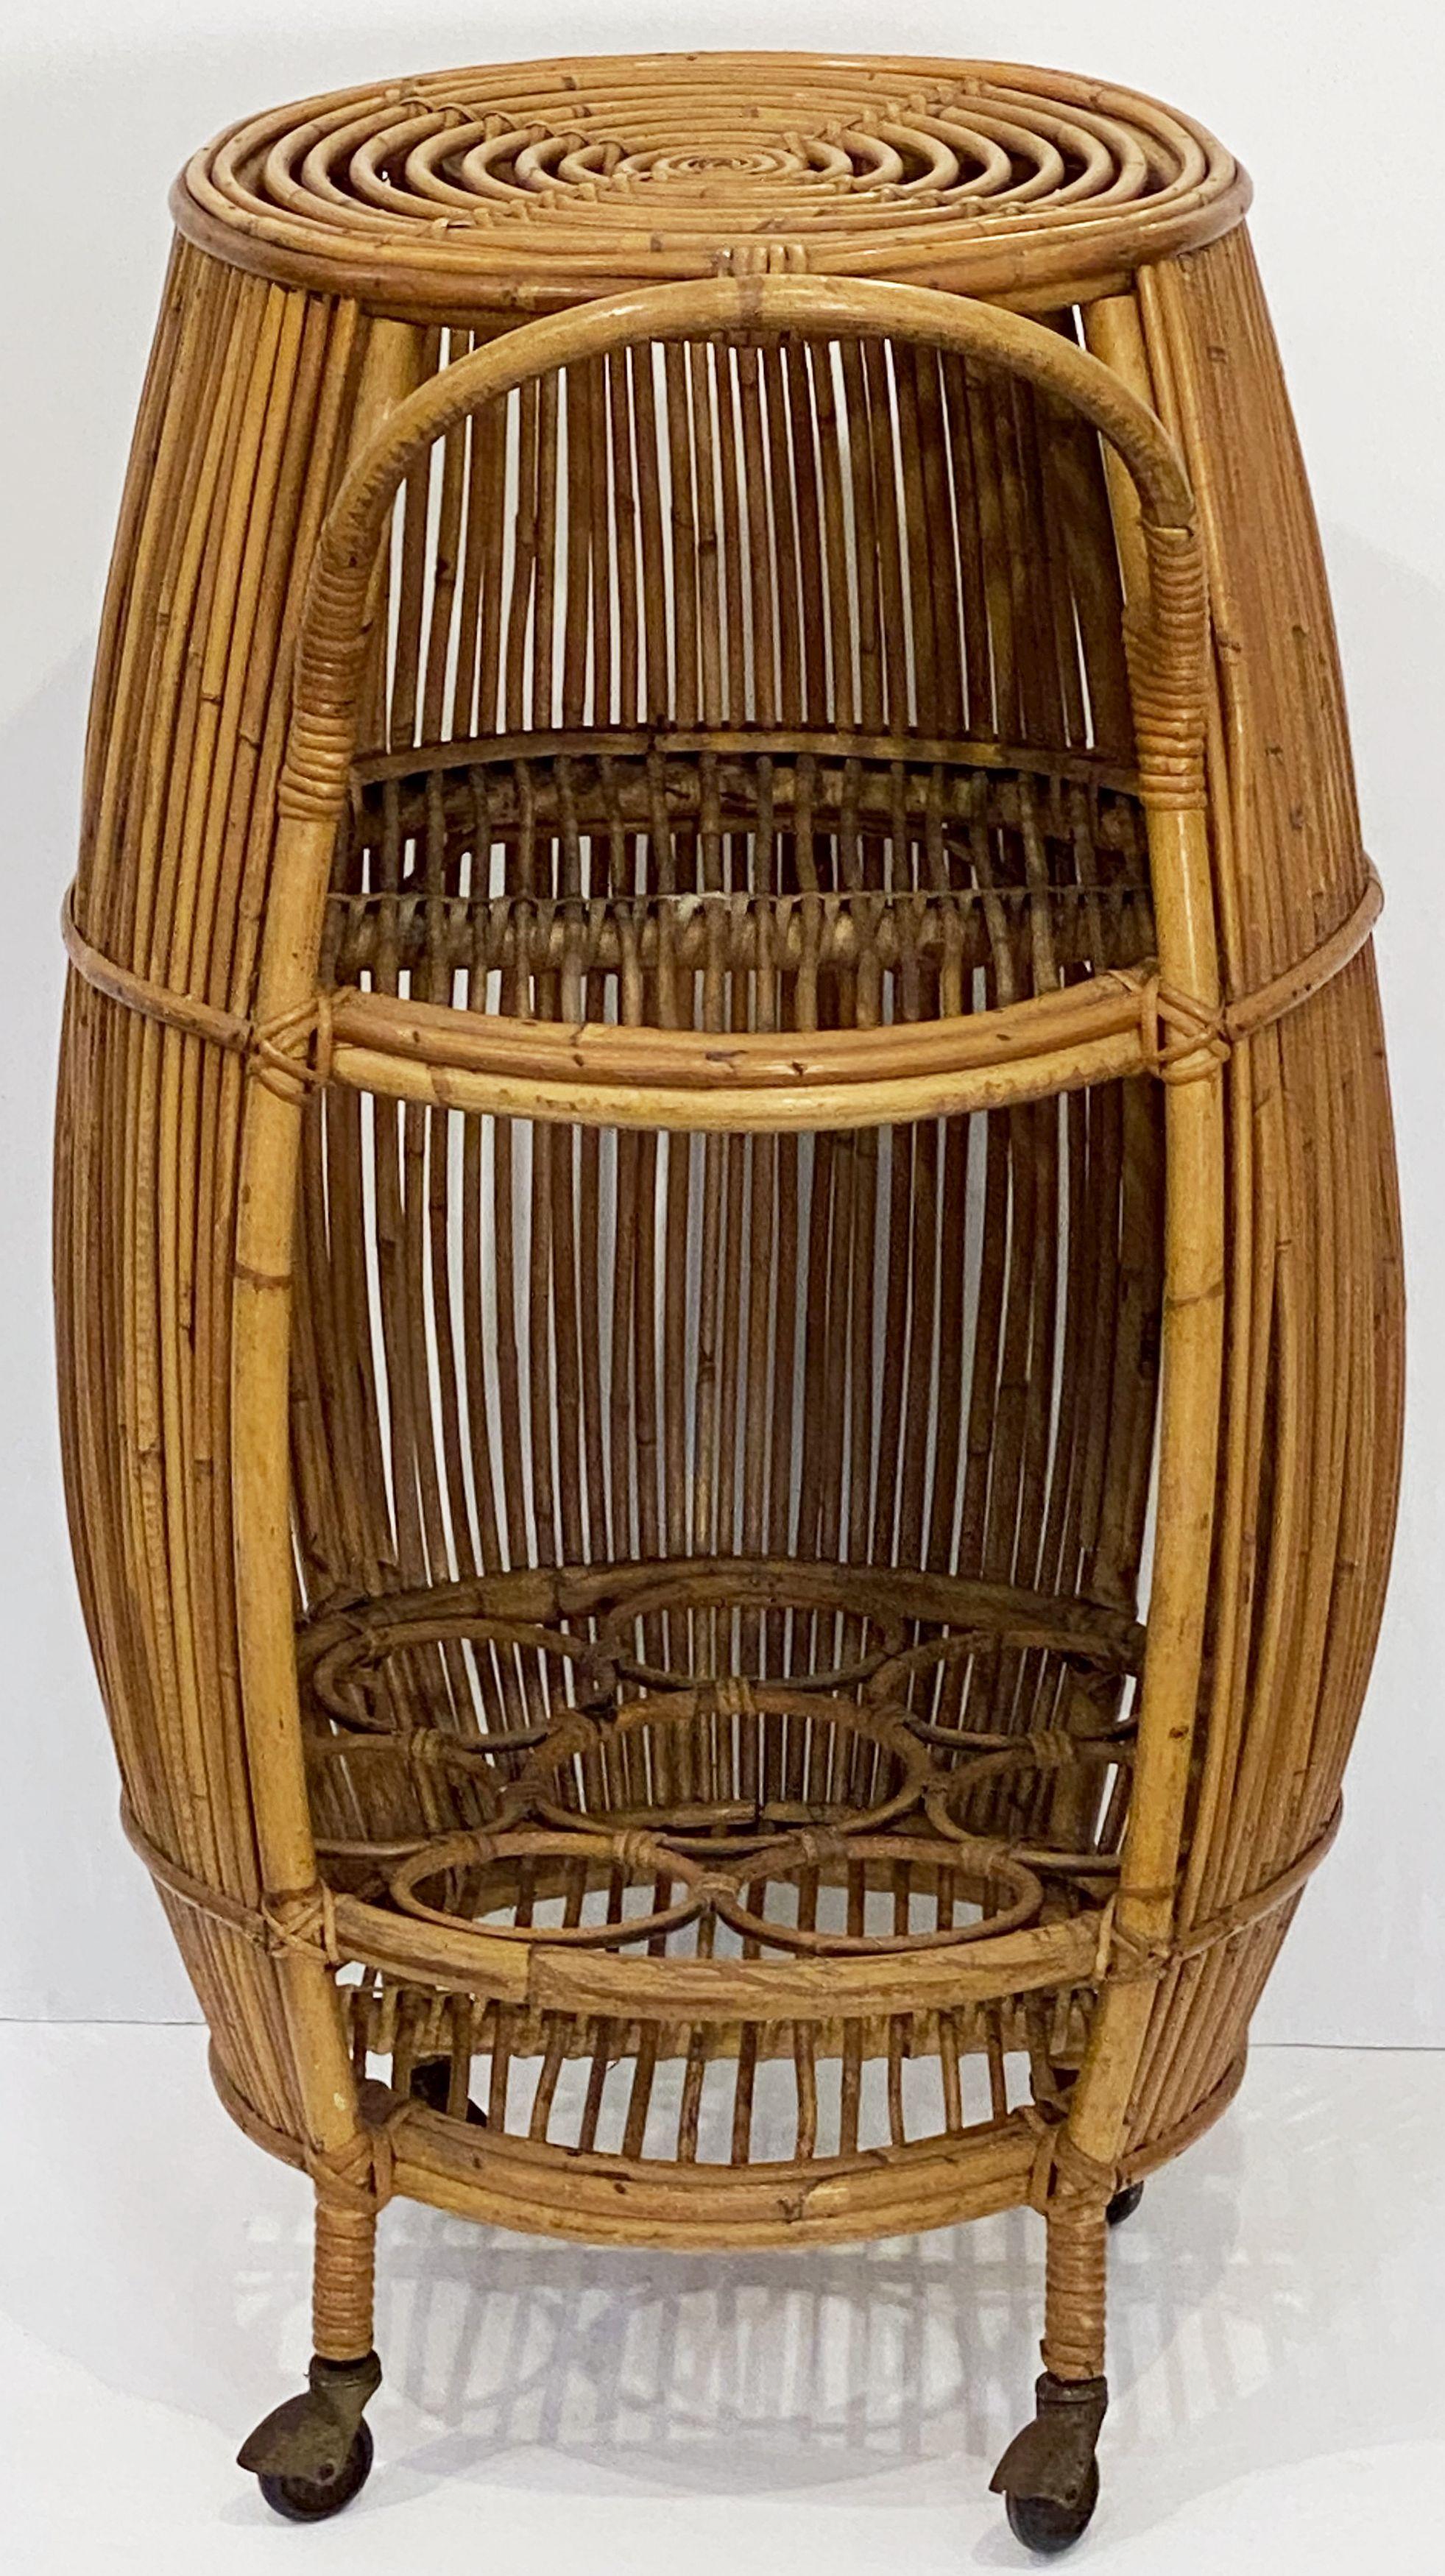 20th Century Italian Mid-Century Rattan and Bamboo Barrel-Shaped Bar Cart For Sale